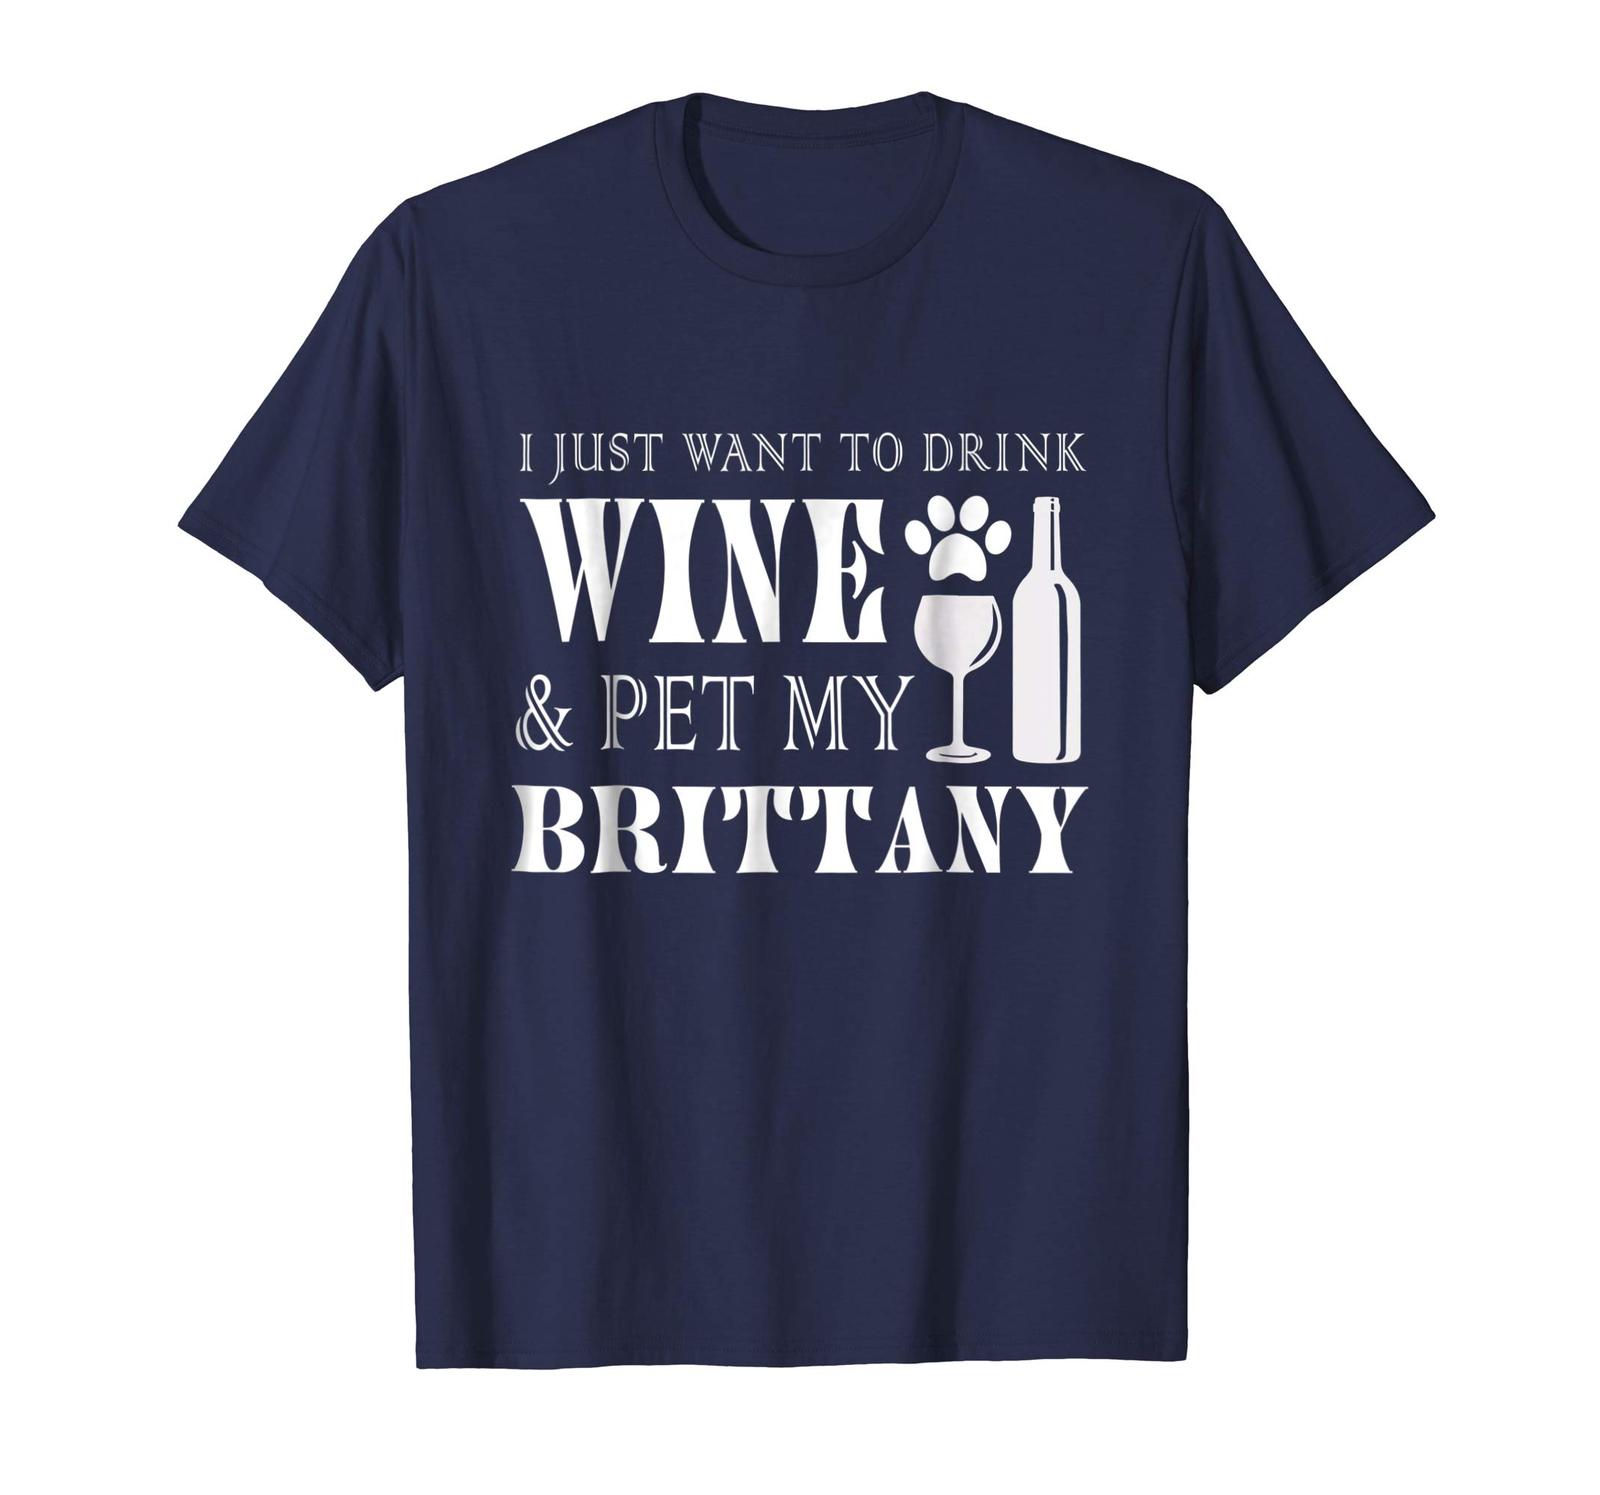 Brand Dog - Dog fashion - wine and brittany shirt dog mom or dog dad gift men